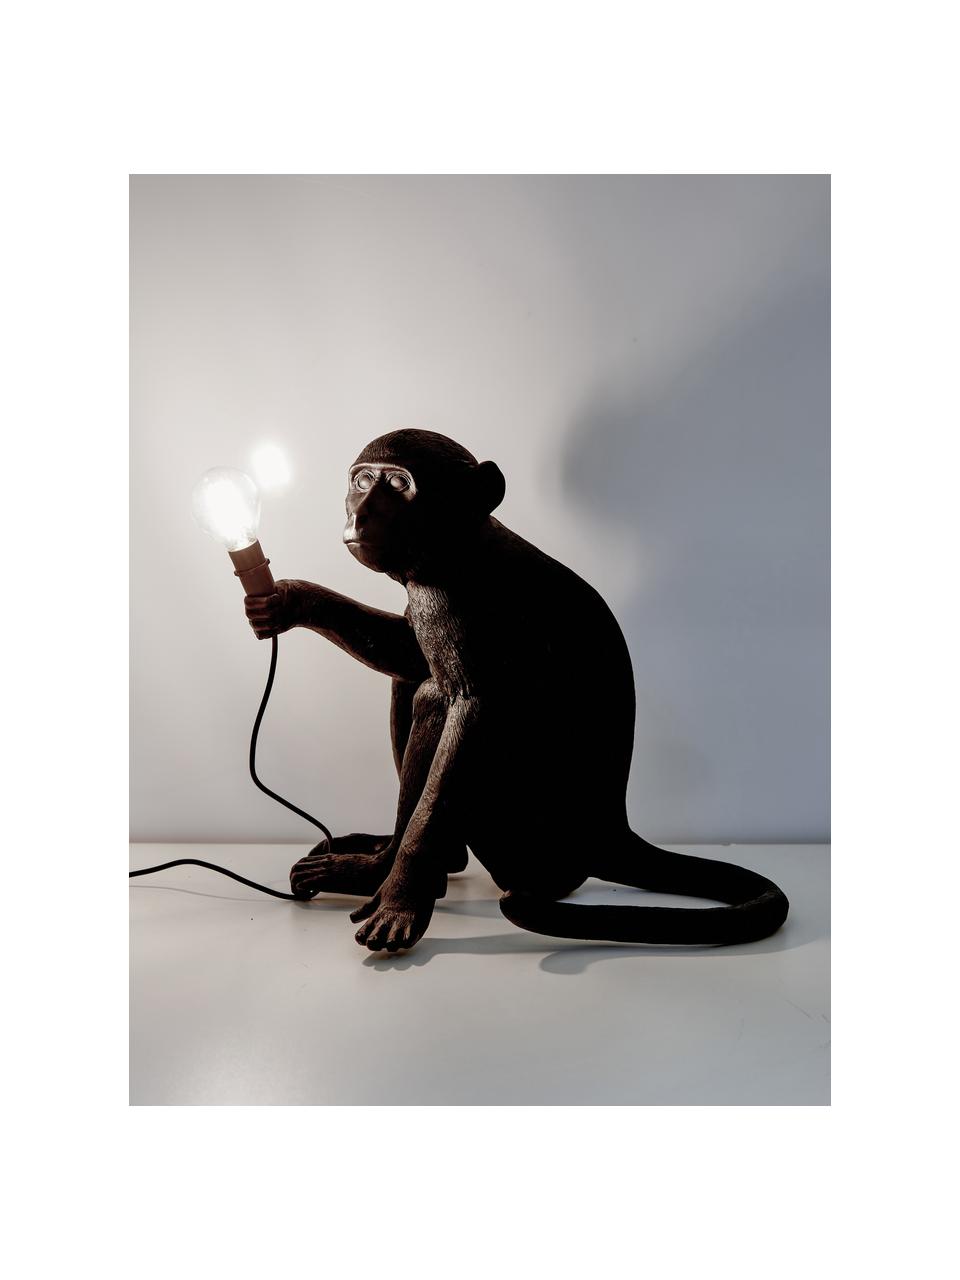 https://static.westwingnow.de/image/upload/seo/t_default.pdp_seo/simple/52/419/2202304/Lampada-da-tavolo-di-design-da-esterno-con-spina-Monkey.jpg